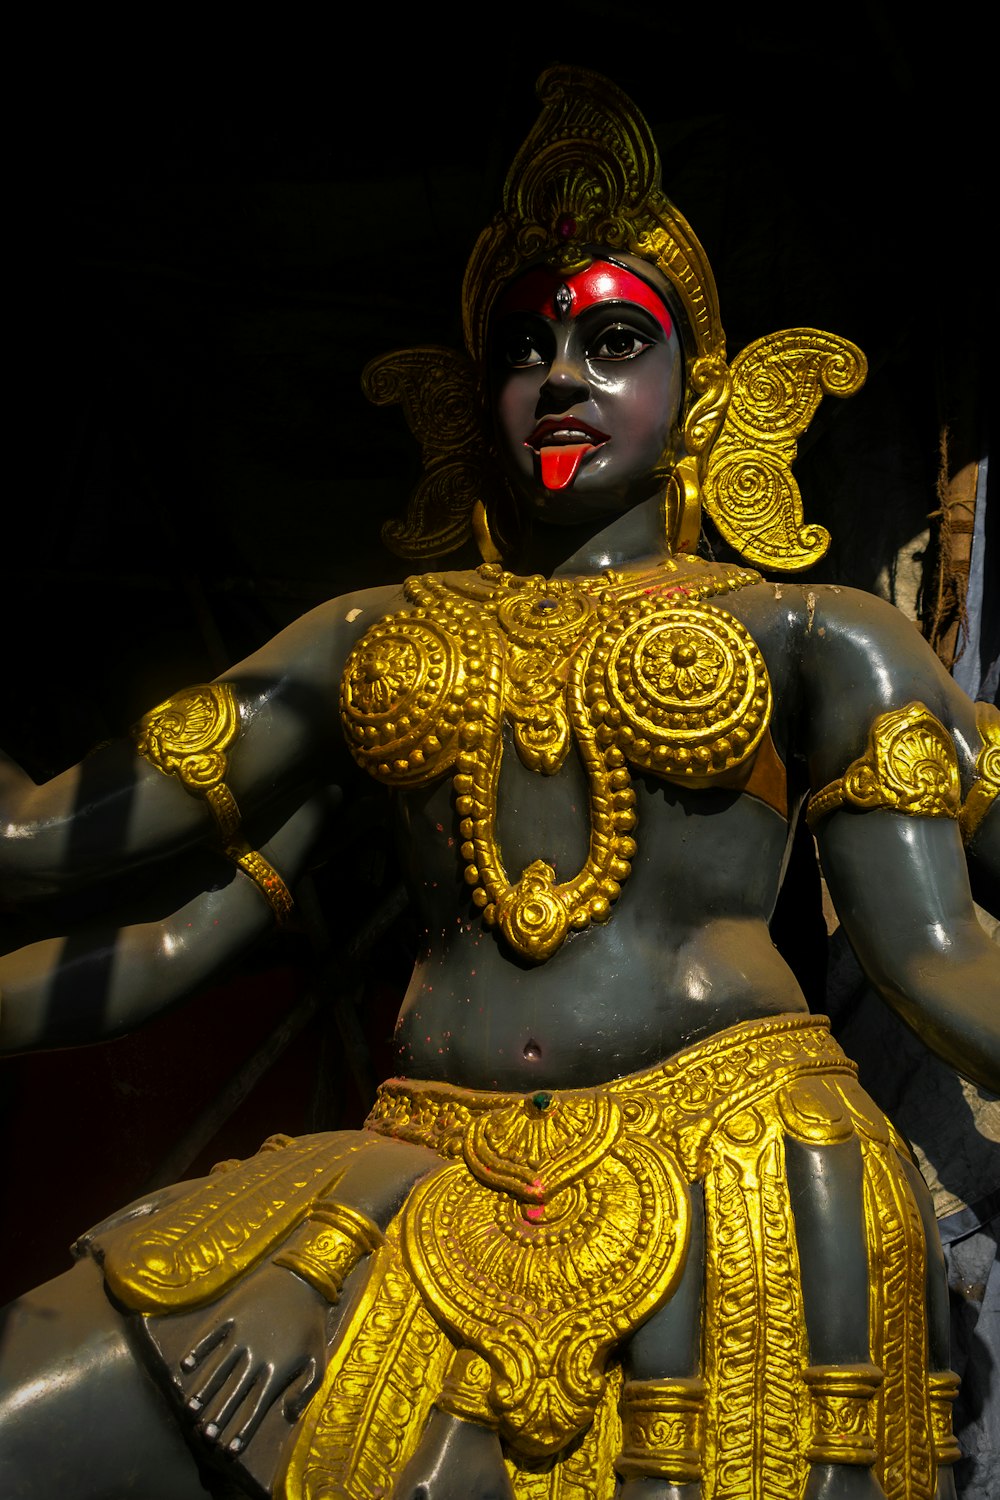 gold and black hindu deity figurine